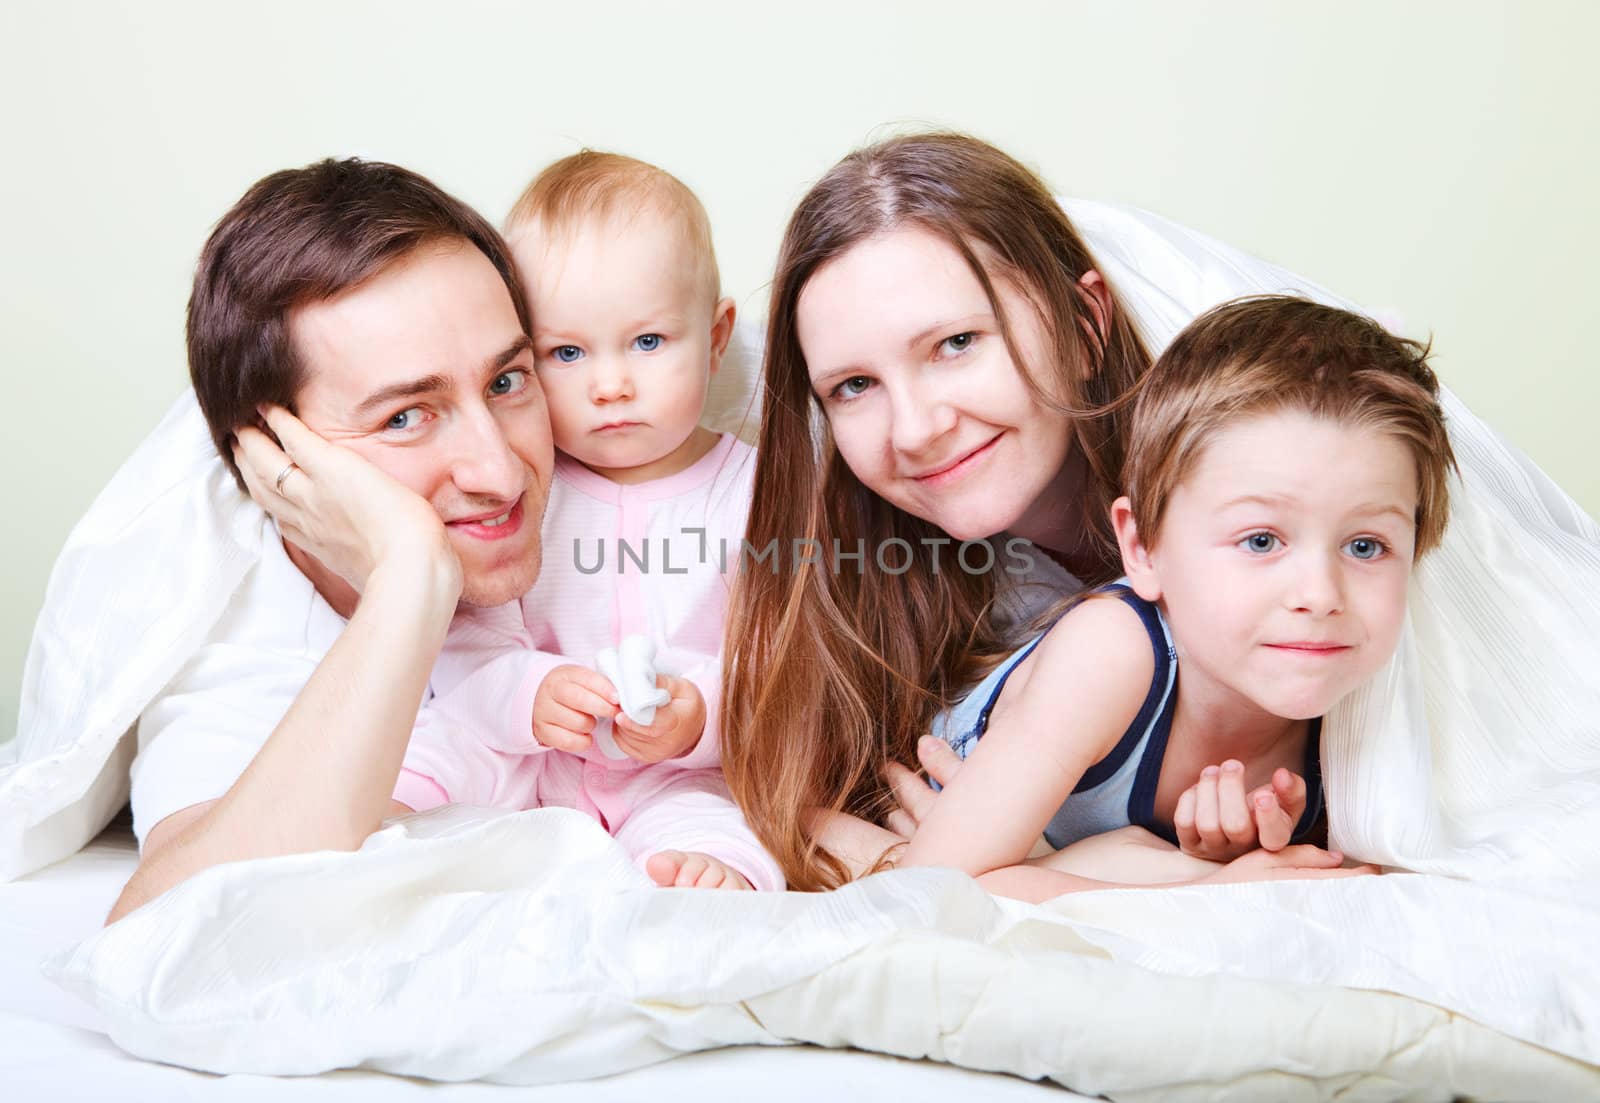 Family in bedroom by shalamov